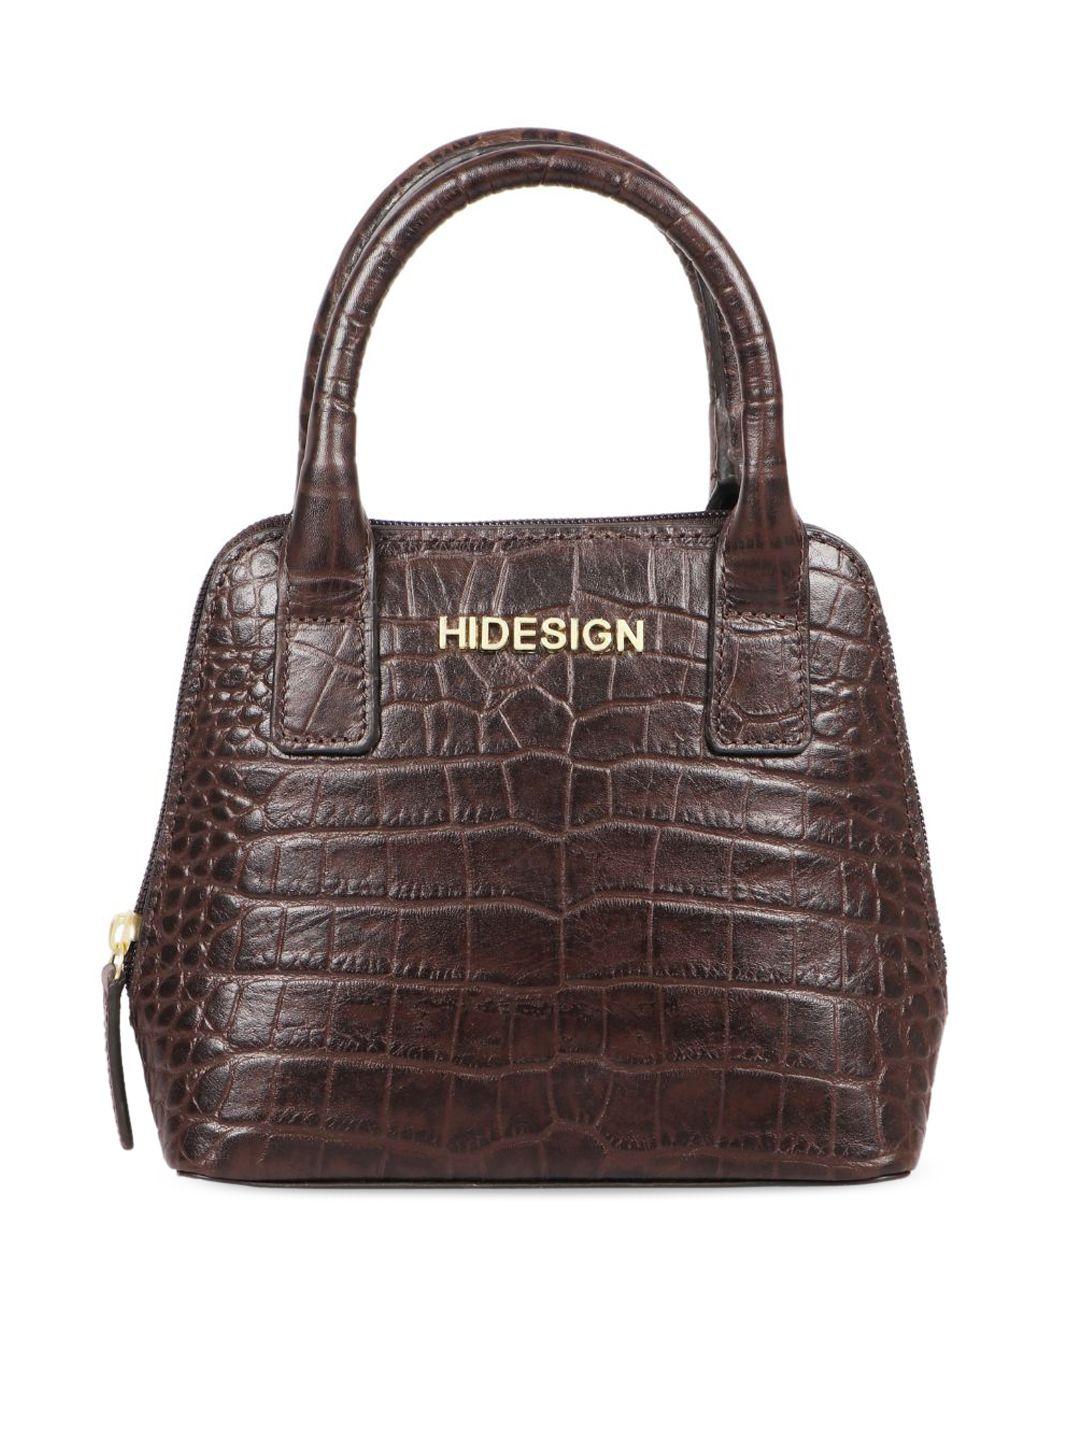 hidesign animal textured leather structured handheld bag